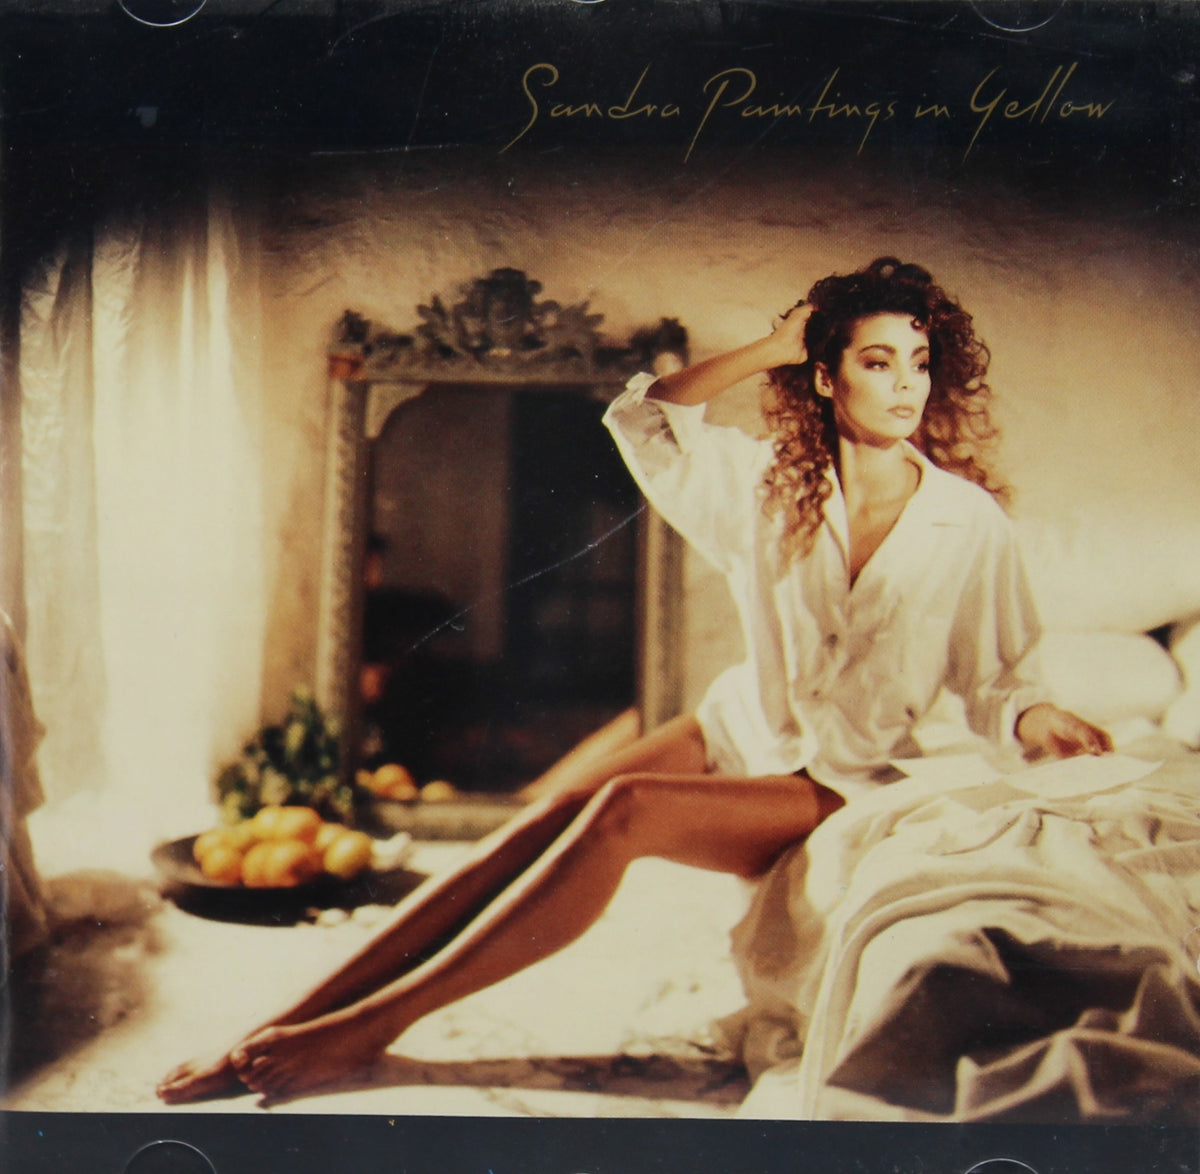 Sandra – Paintings In Yellow, CD, Album, Germany 1990